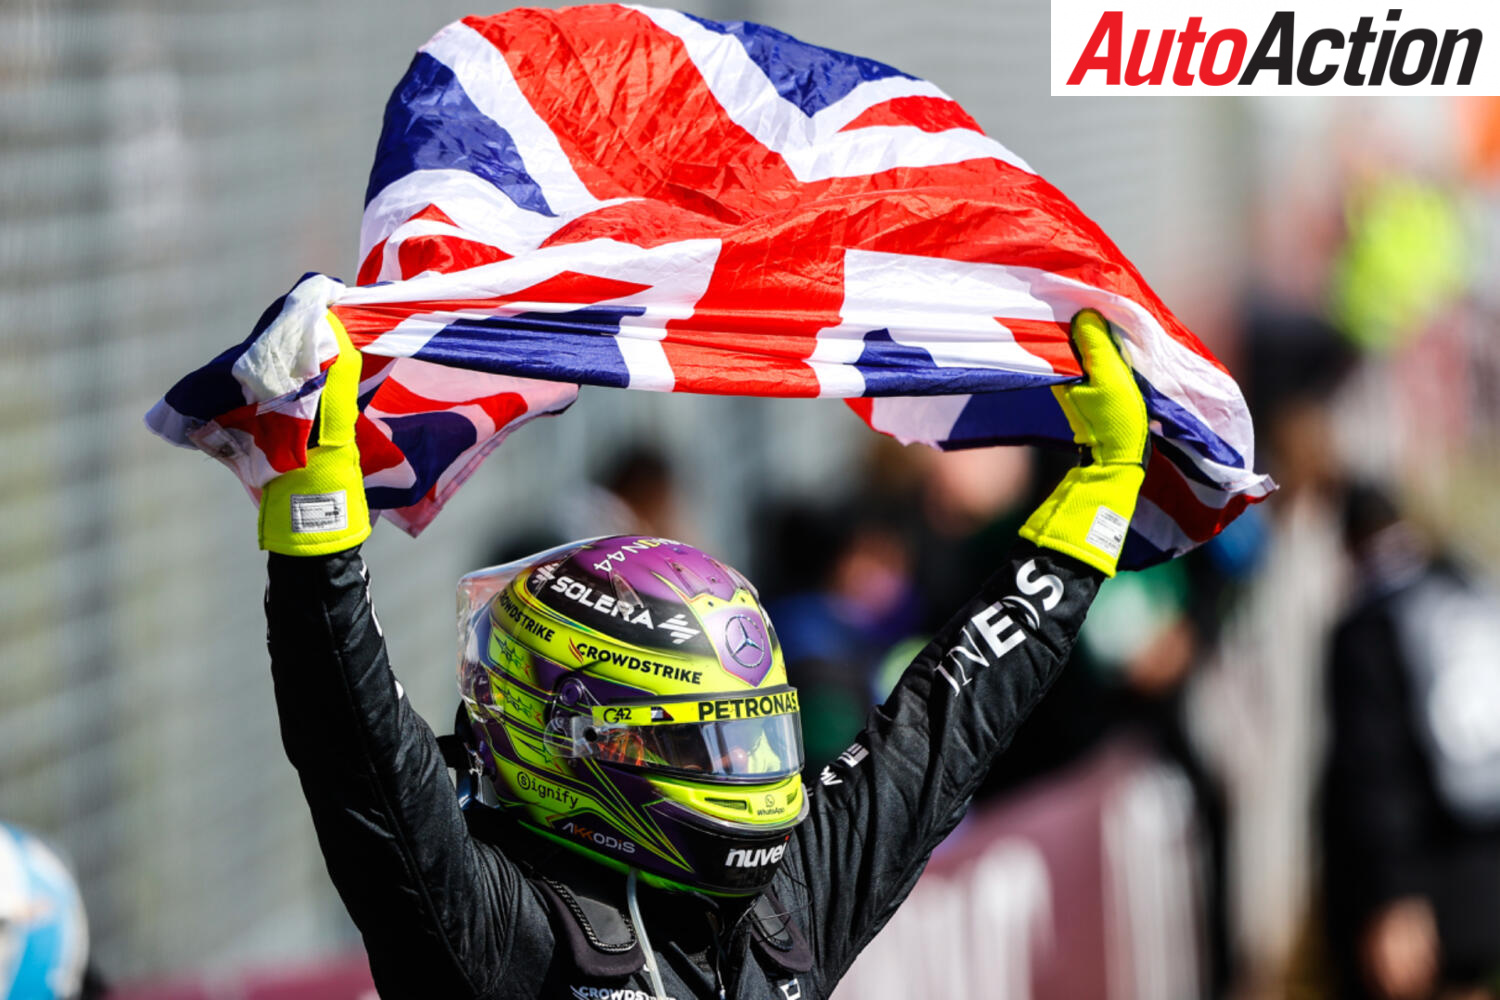 Thrilling British GP rewards Hamilton with emotional record-breaking win - Auto Action